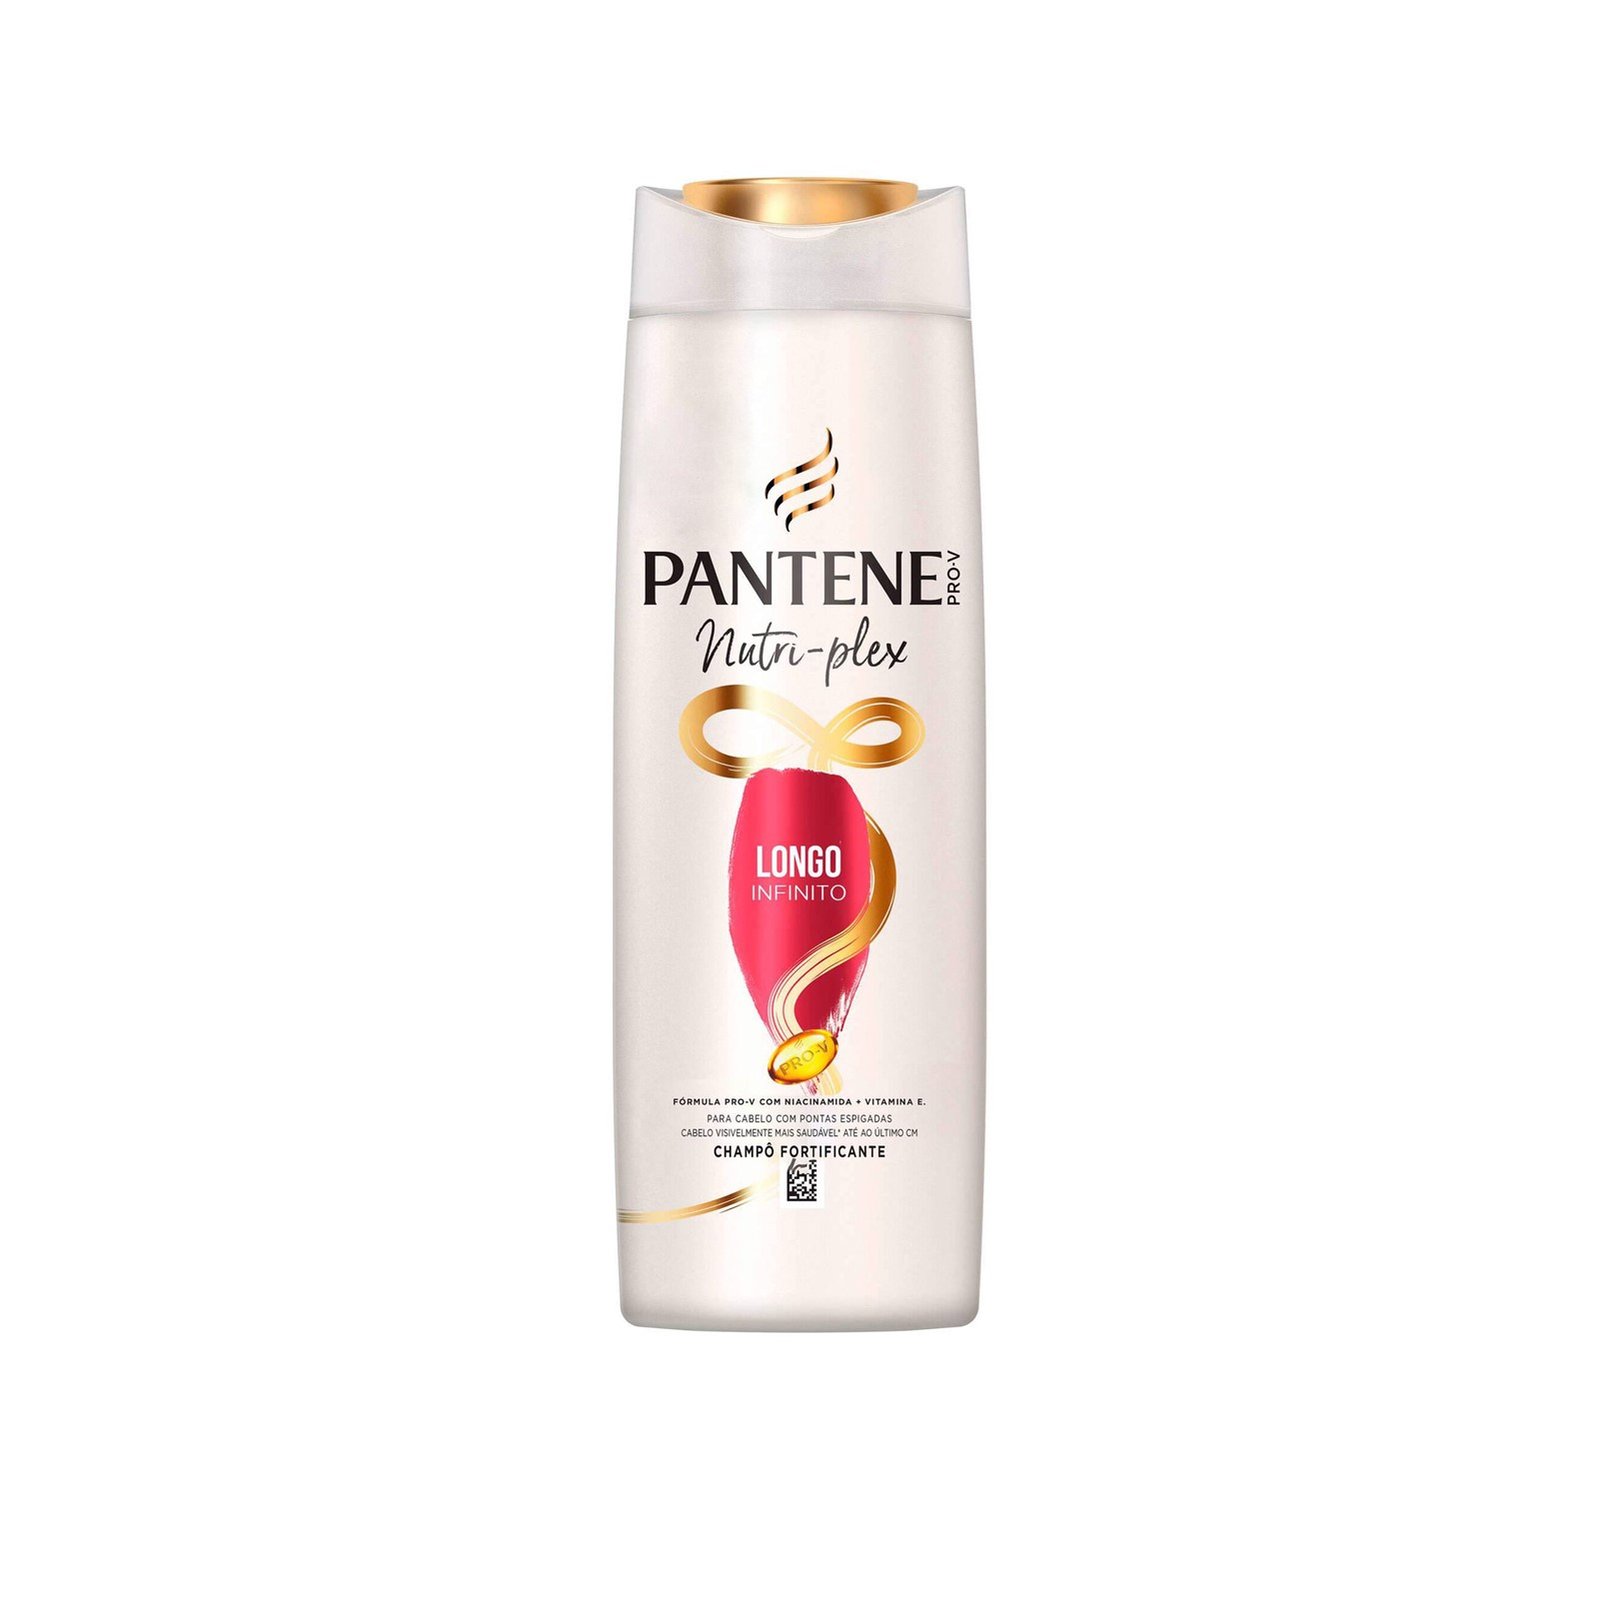 Pantene Pro-V Nutri-Plex Infinite Lenghts Shampoo 600ml (20.28 fl oz)